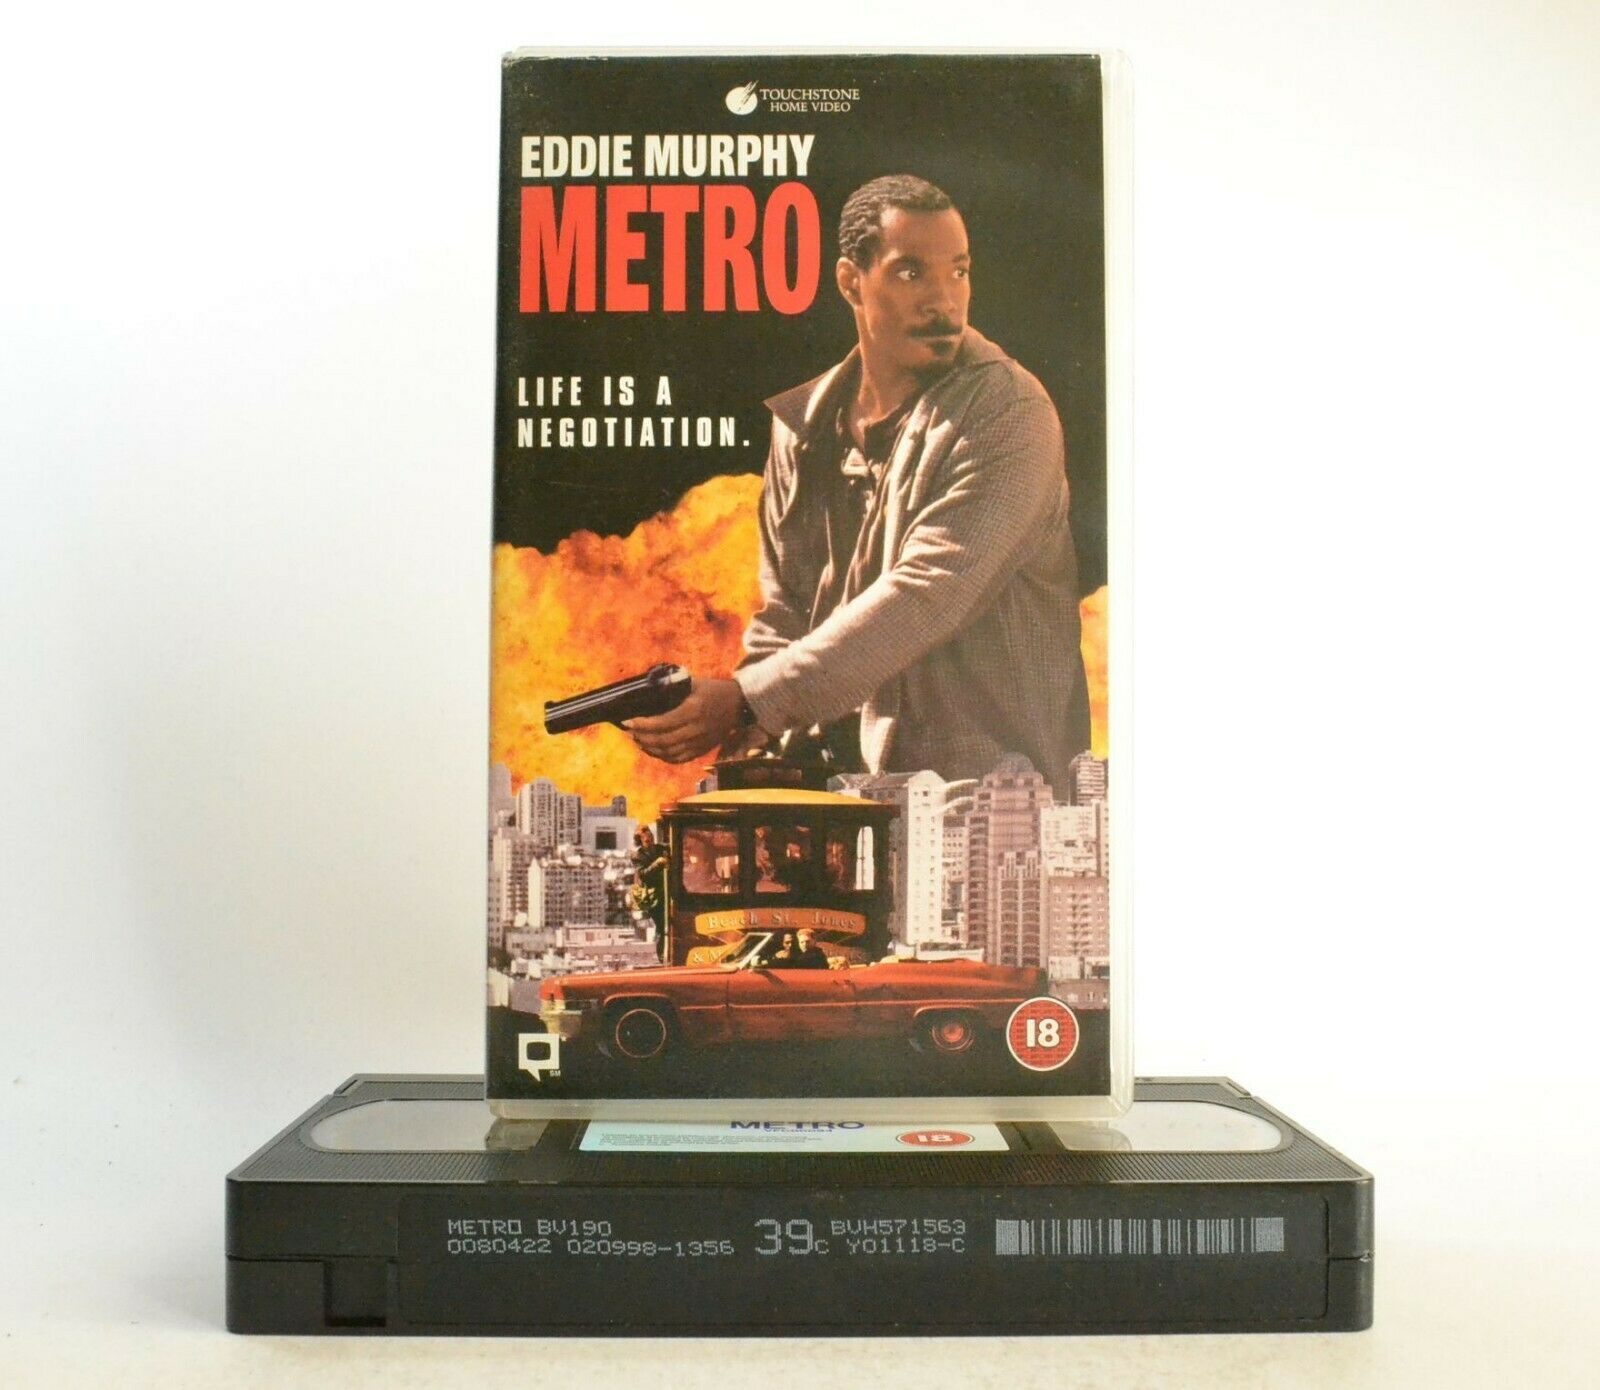 Metro: Touchstone (1997) - Action Thriller - Eddie Murphy/Michael Rapaport - VHS-